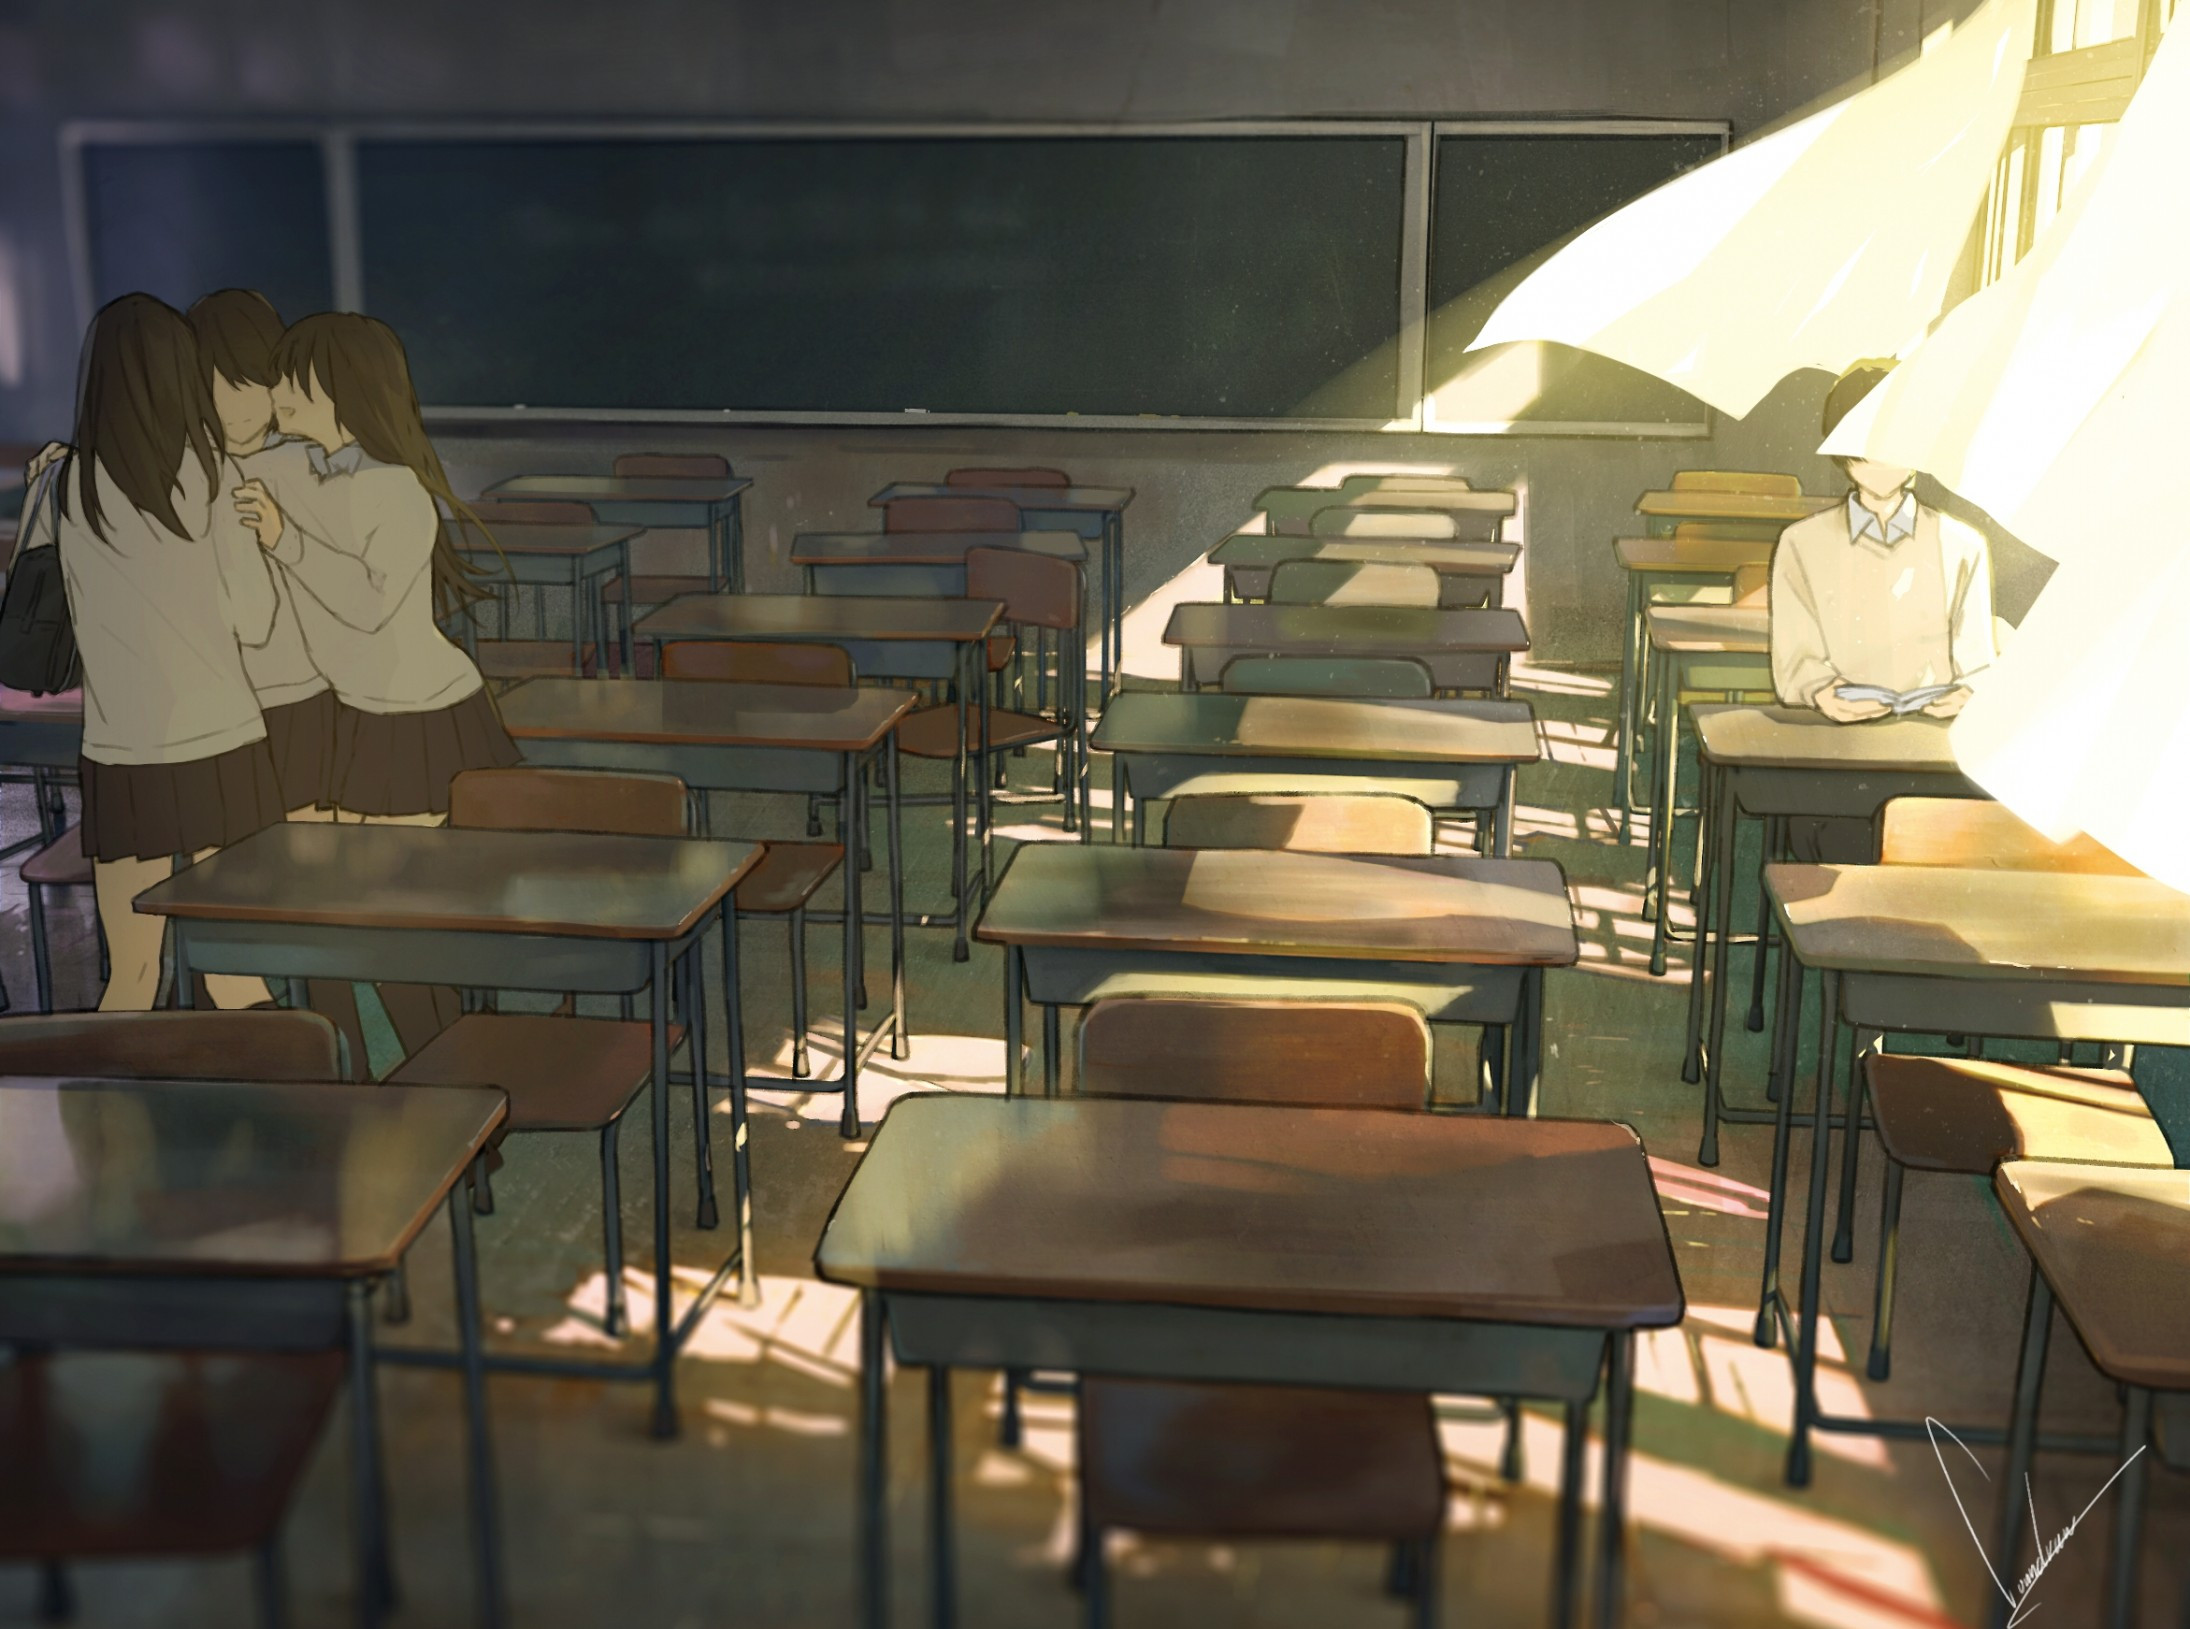 Download 2190x1629 Anime School, Classroom, Desks, Wind, Lonely Boy Wallpaper